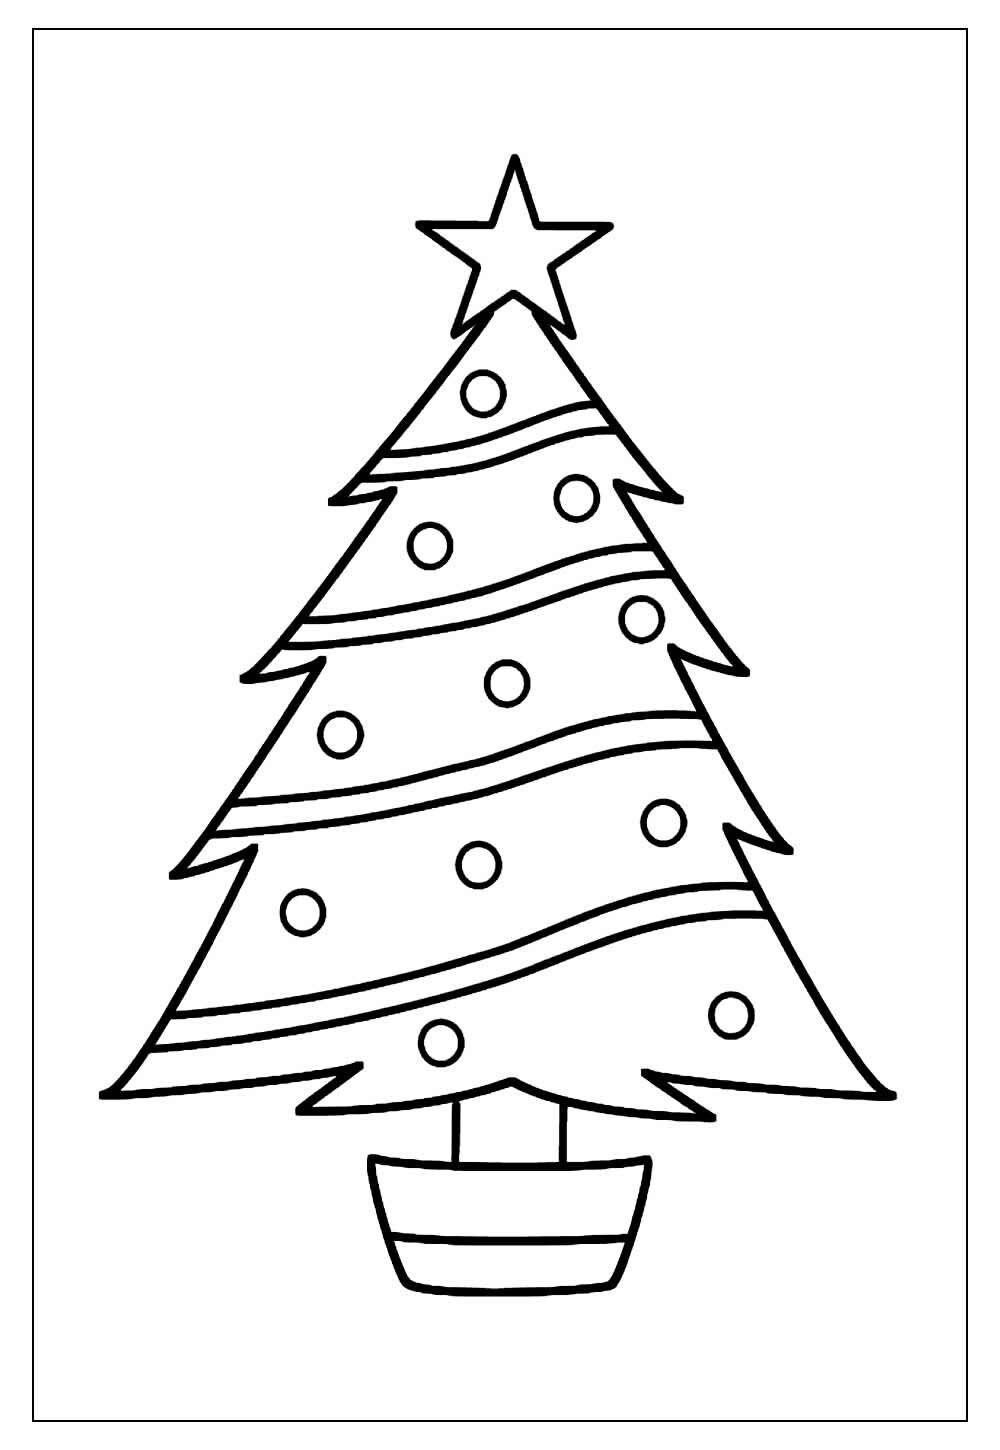 Desenho de Árvore de Natal para colorir